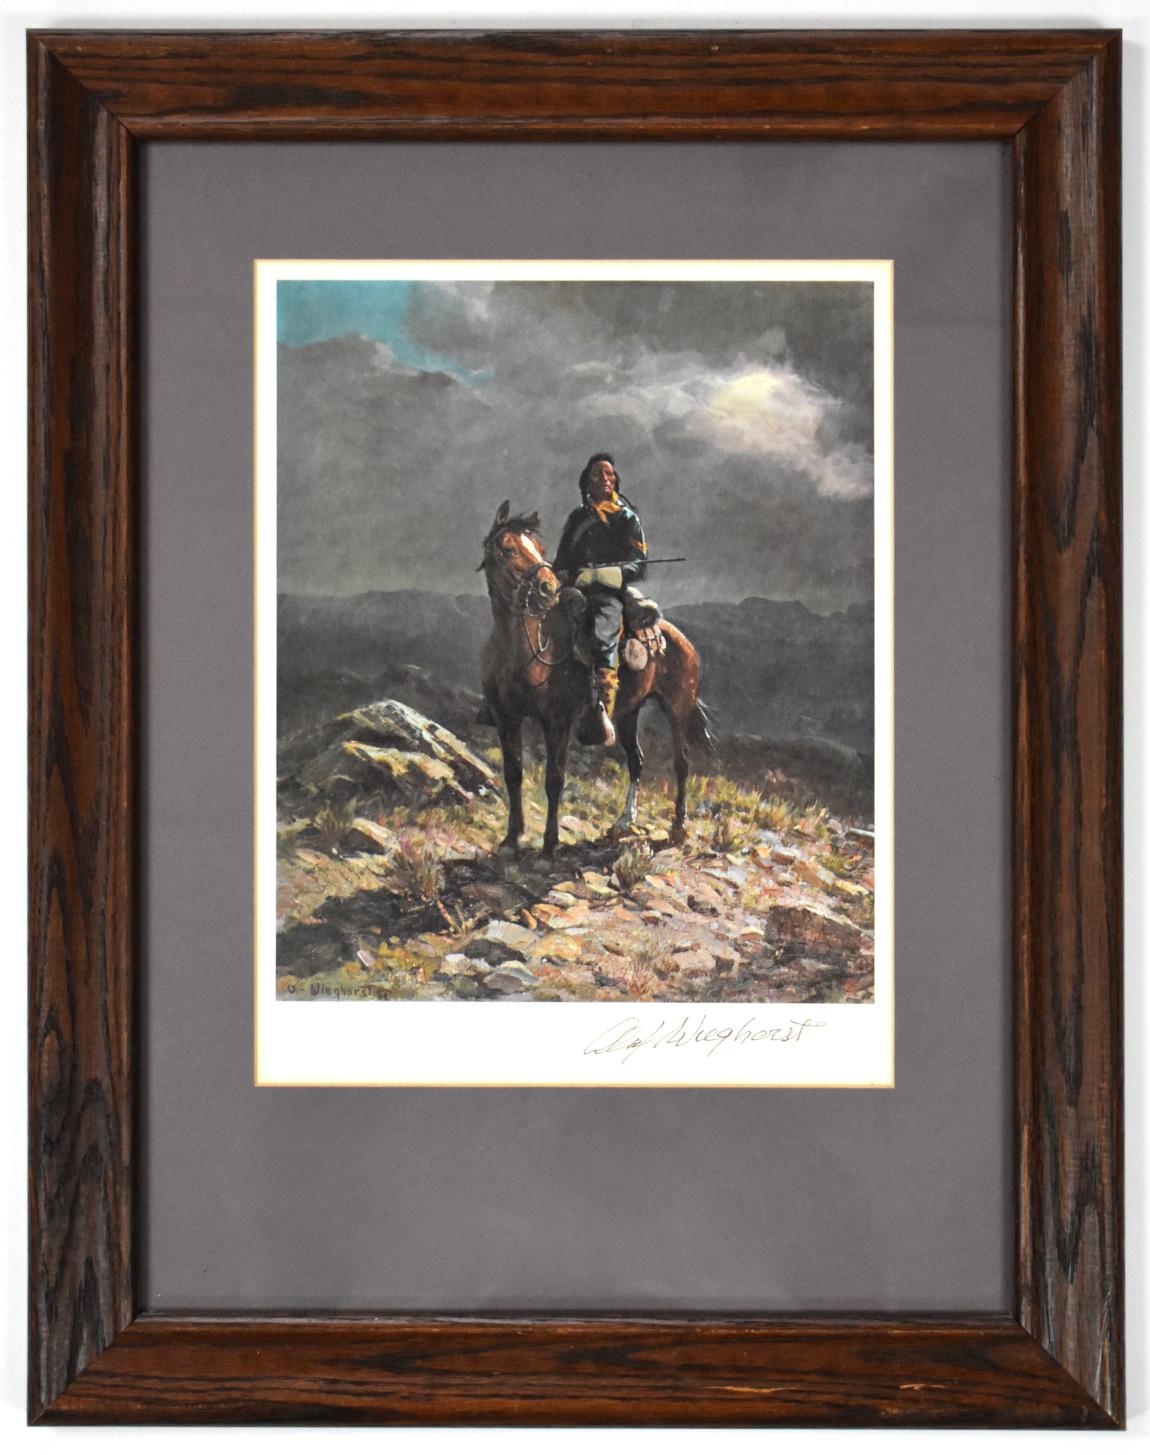 Olaf Wieghorst Figurative Print - "INDIAN ON HORSE" WESTERN NATIVE AMERICAN